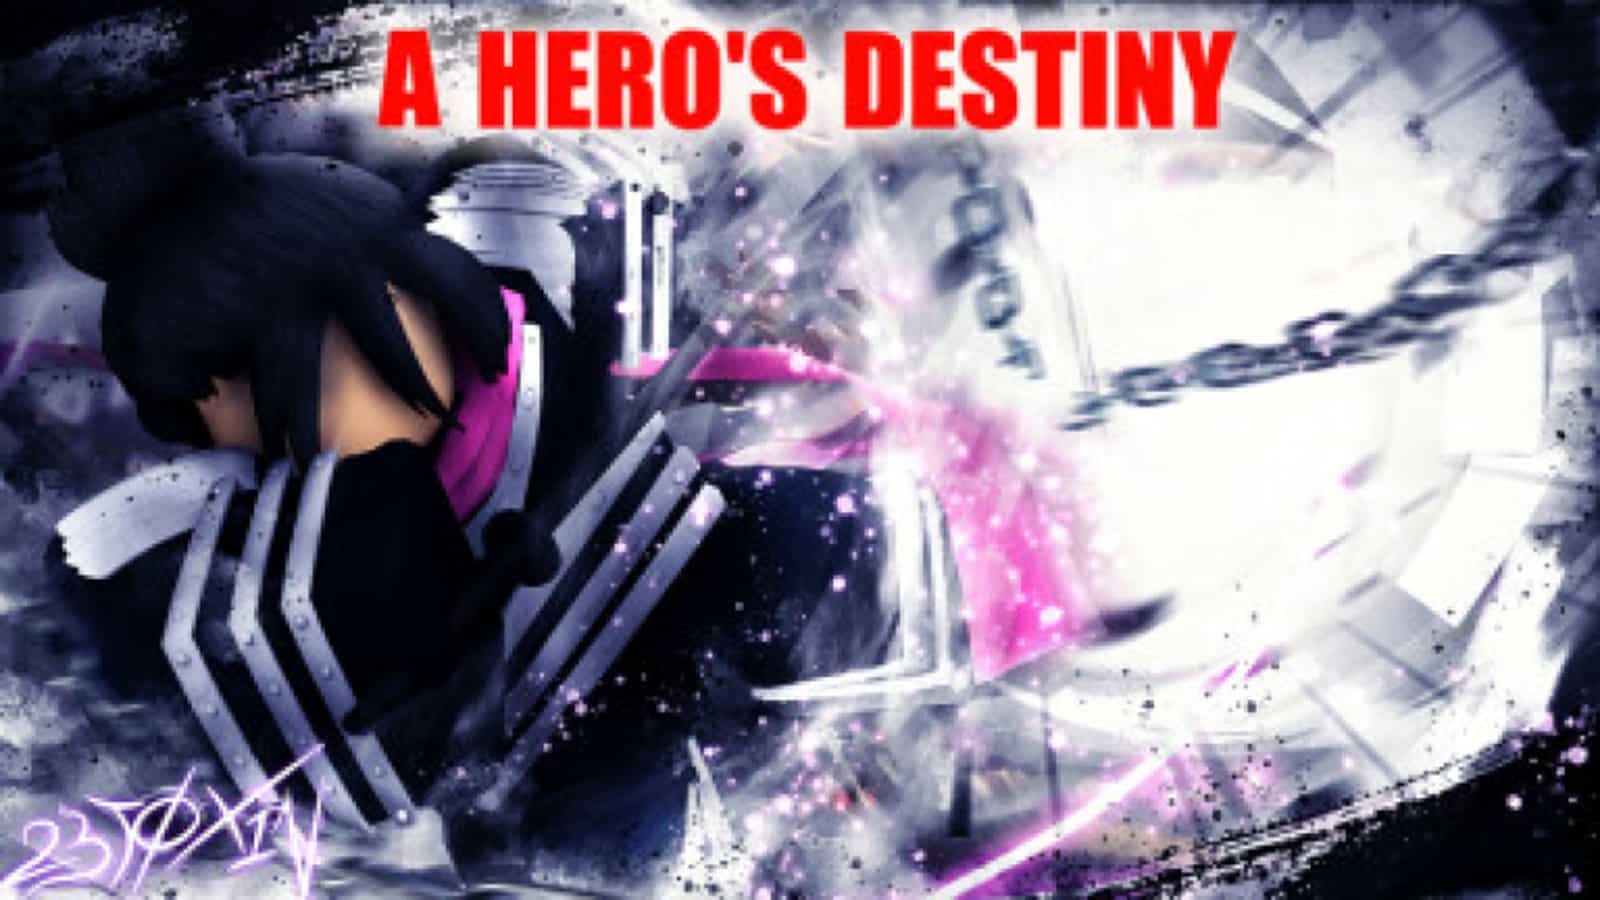 A Hero's Destiny promo codes for June 2022